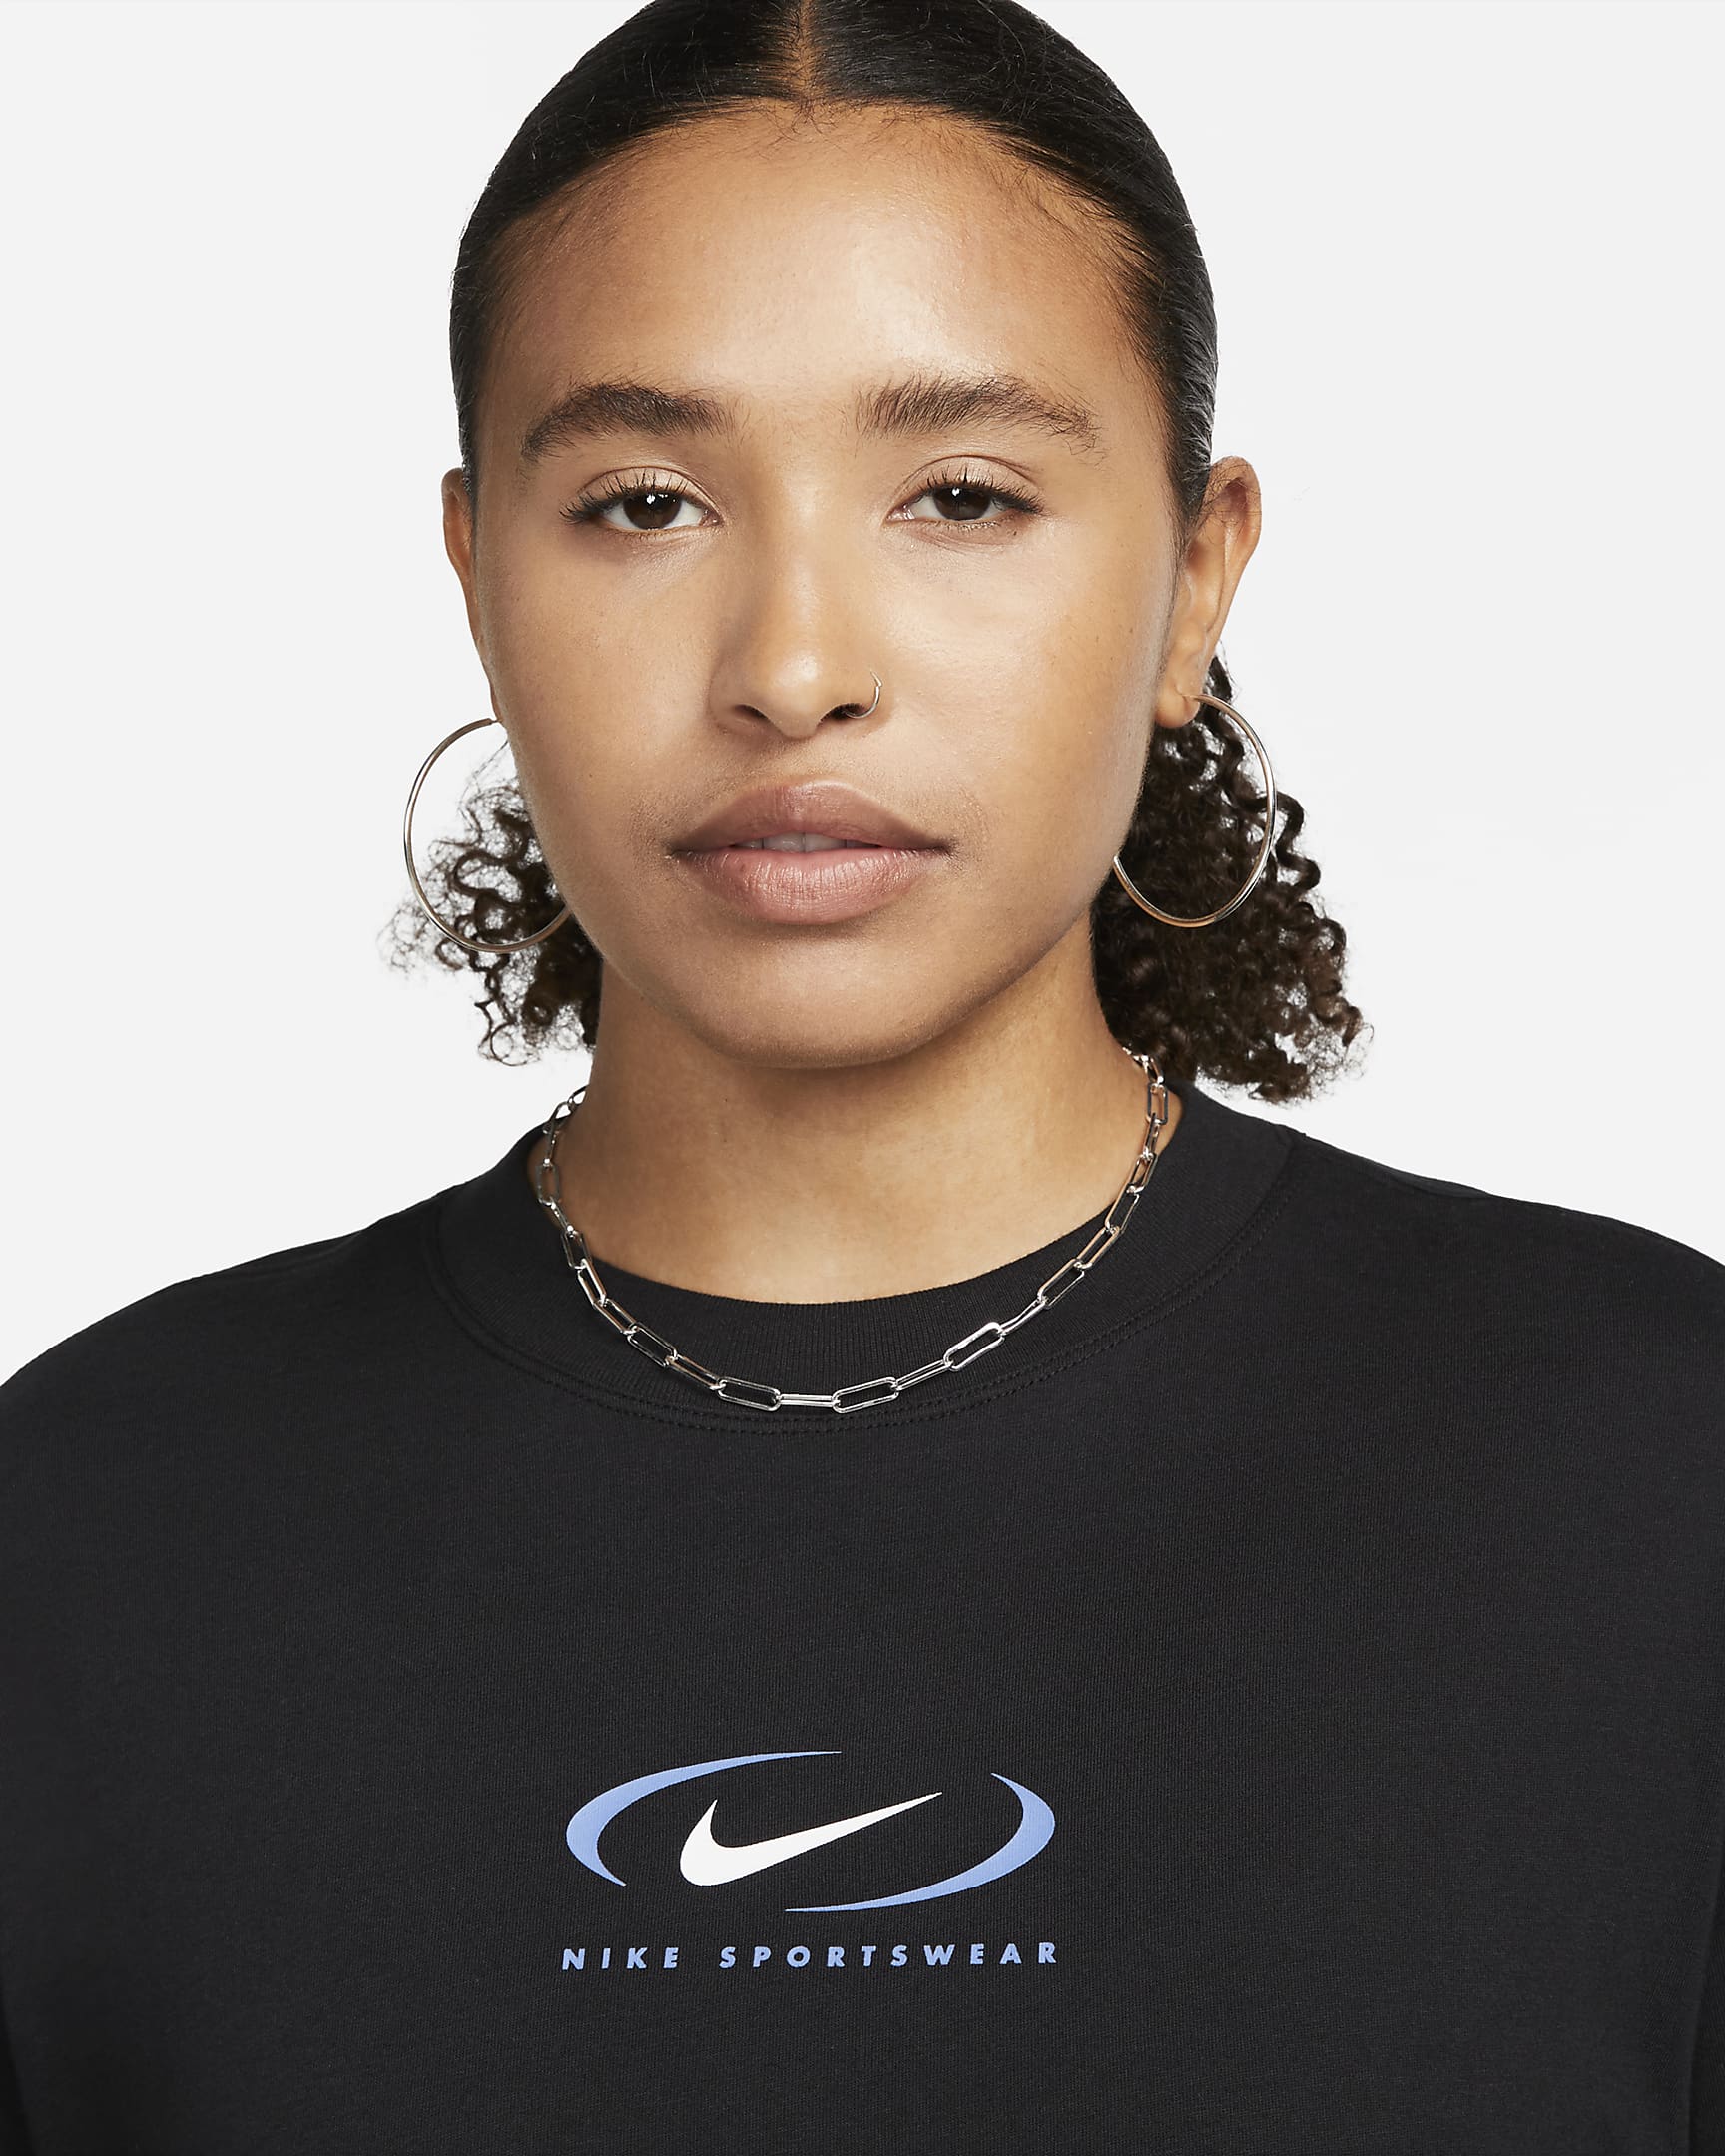 Nike Sportswear Women's Graphic T-Shirt. Nike HR